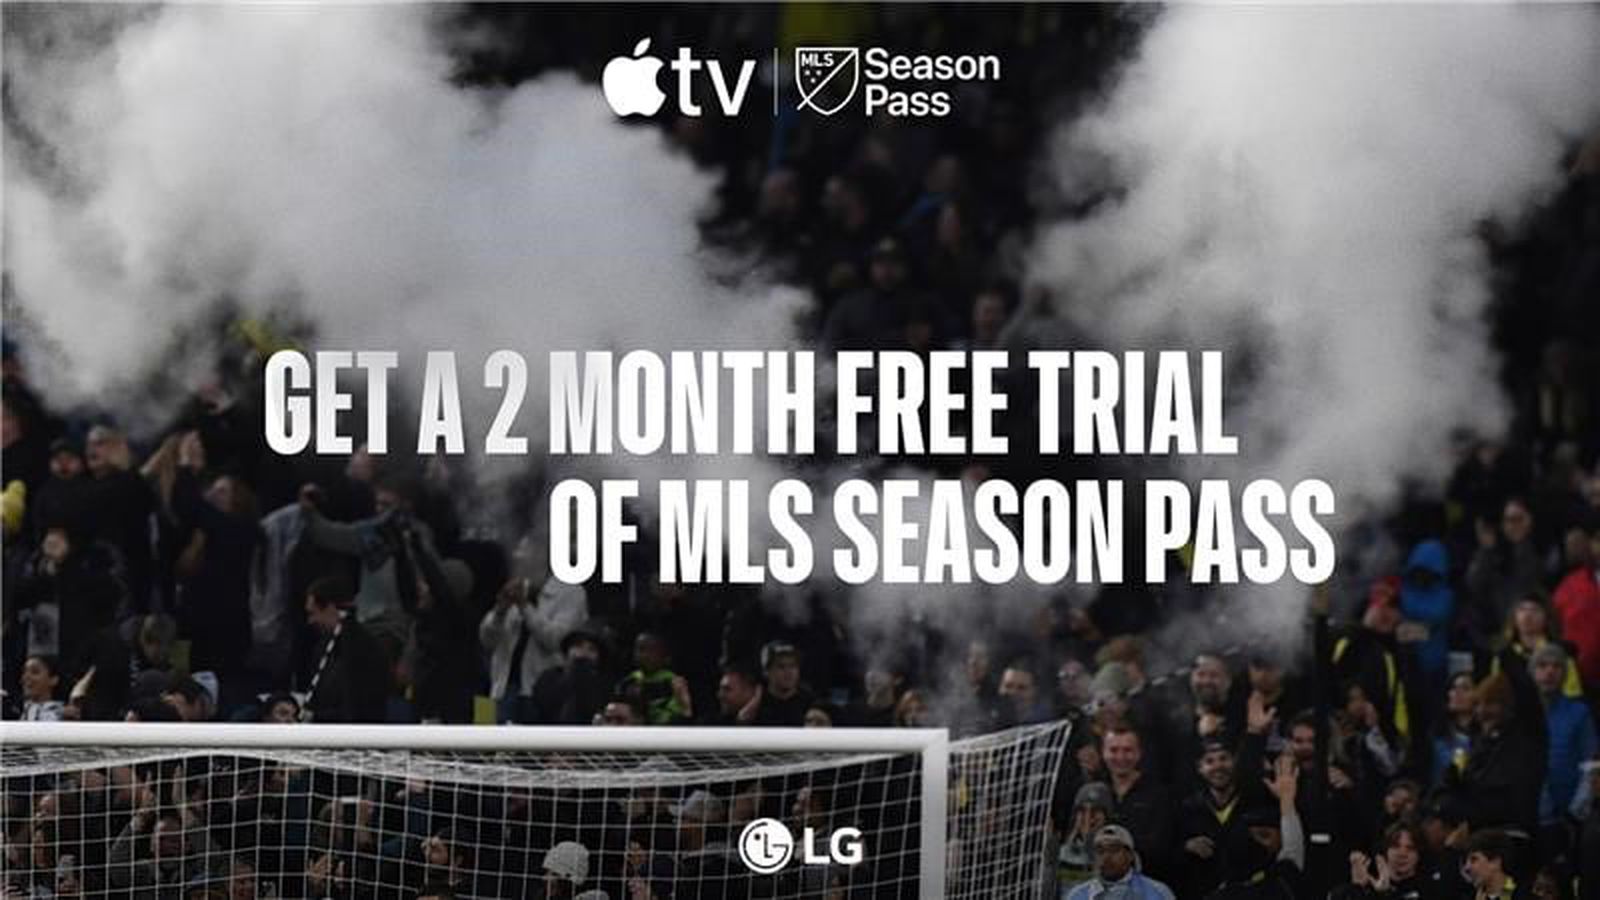 LG Offering Two Free Months of Apple's MLS Season Pass - macrumors.com